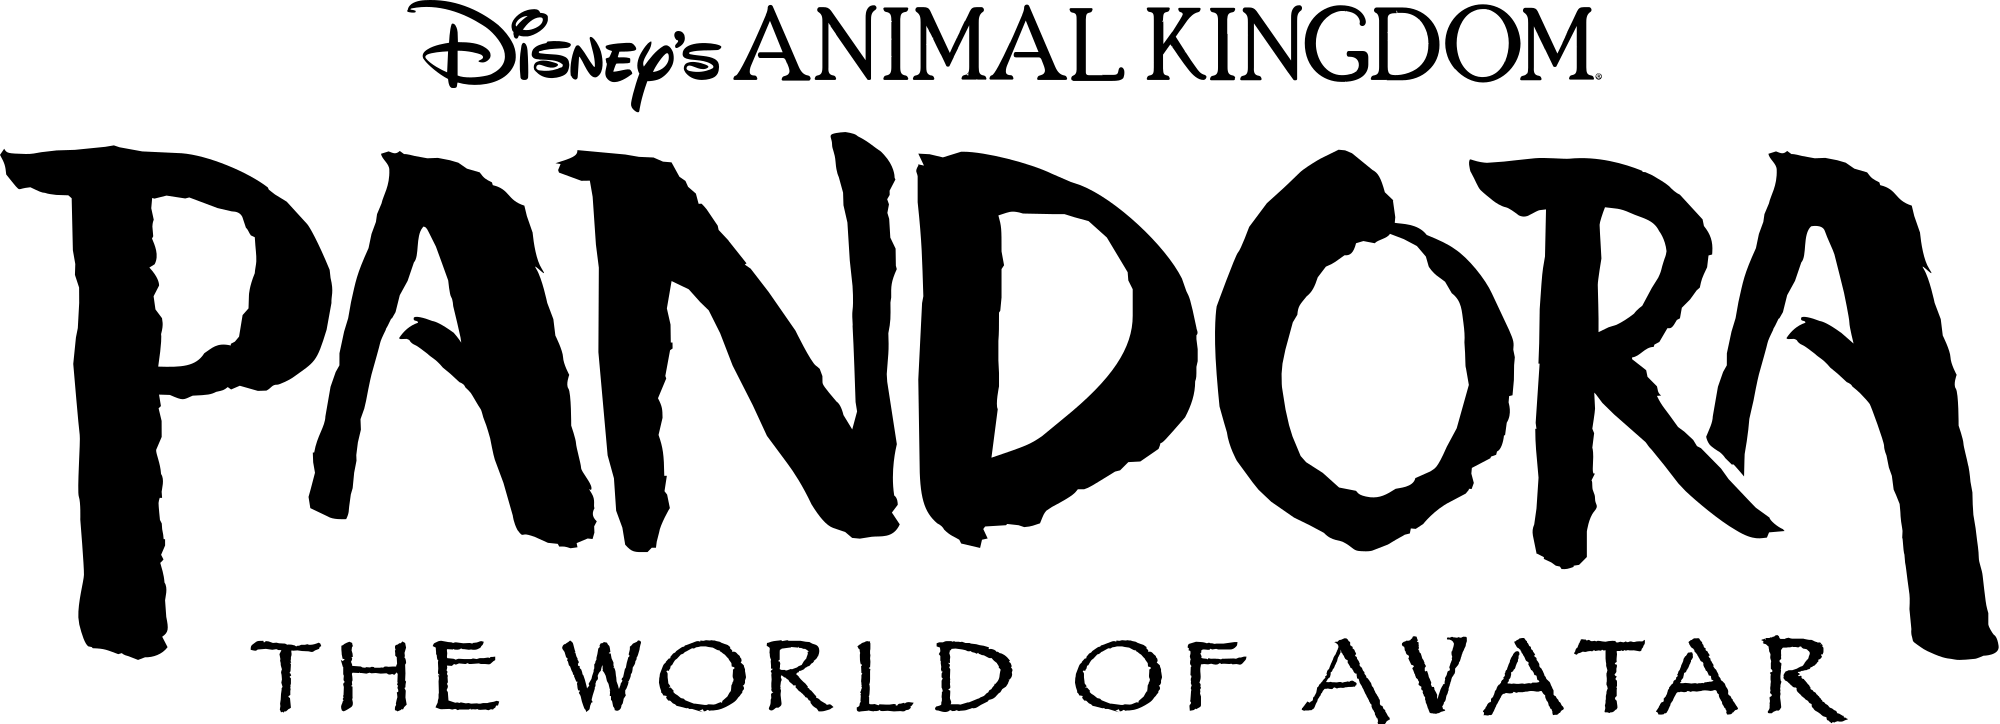 Disney Pandora Logo - File:Pandora logo black with Disney's Animal Kingdom.svg - Wikimedia ...